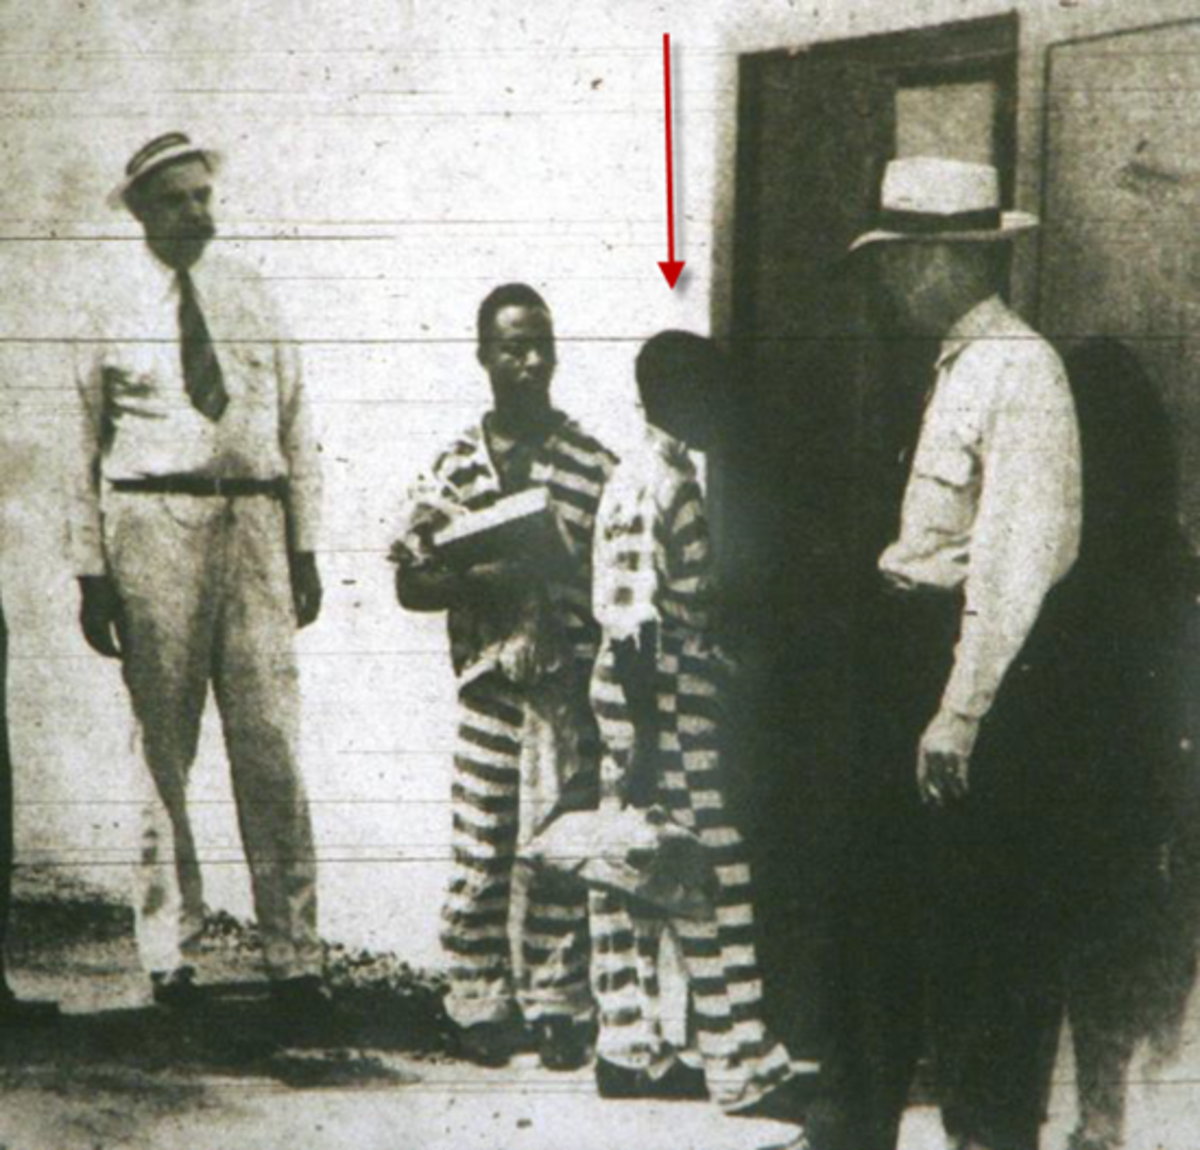 George Stinney: Sham Trial and Unjust Execution